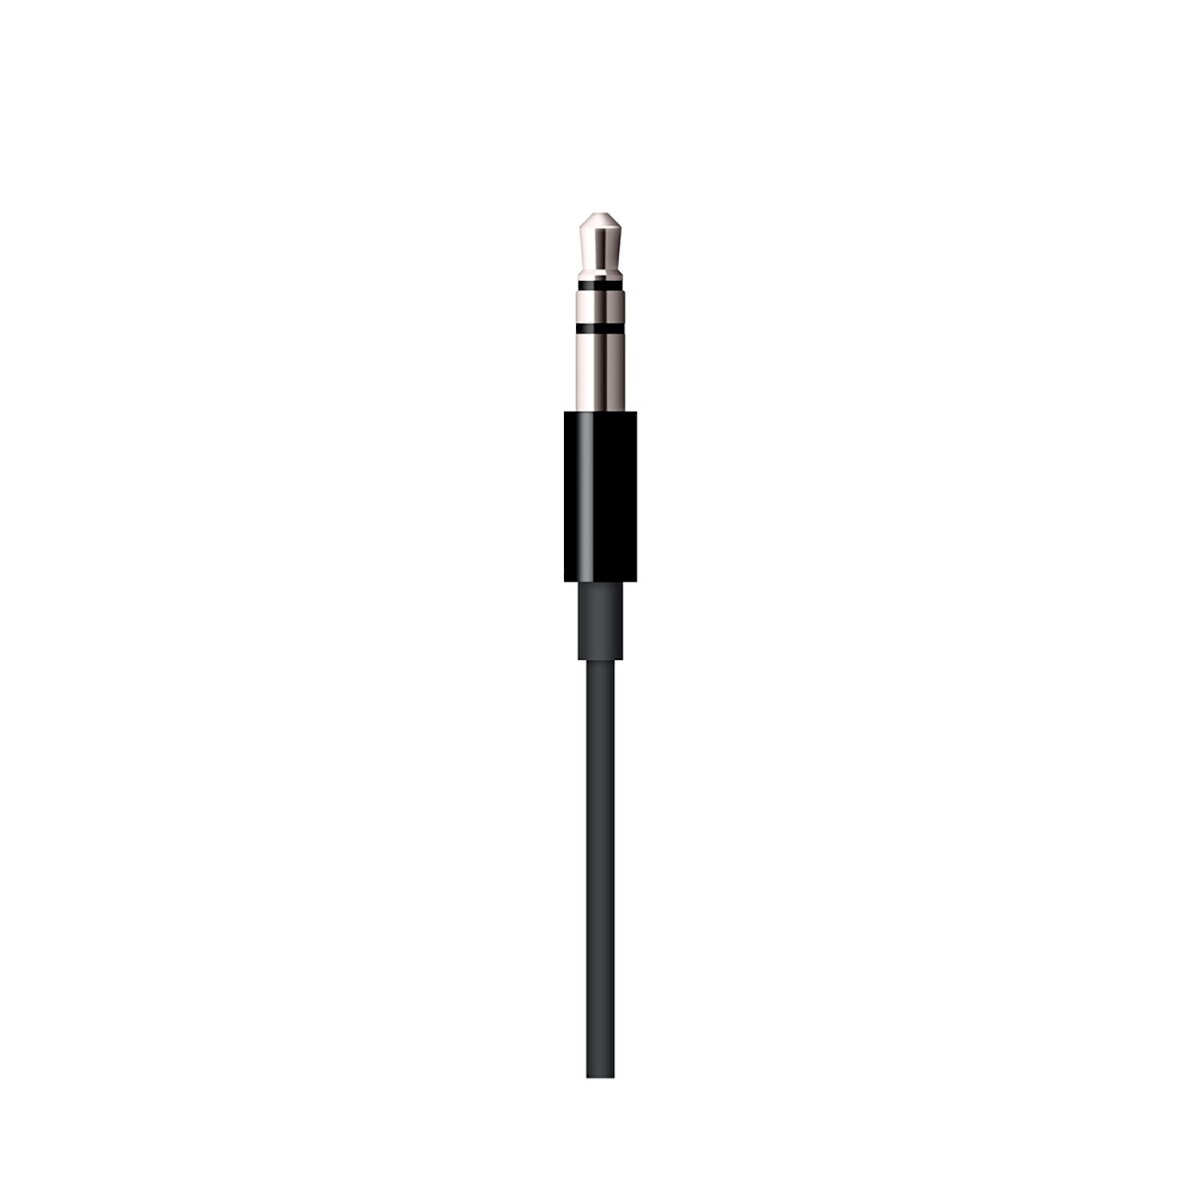 Apple Cable de Lightning a entrada de audio de 3.5 mm